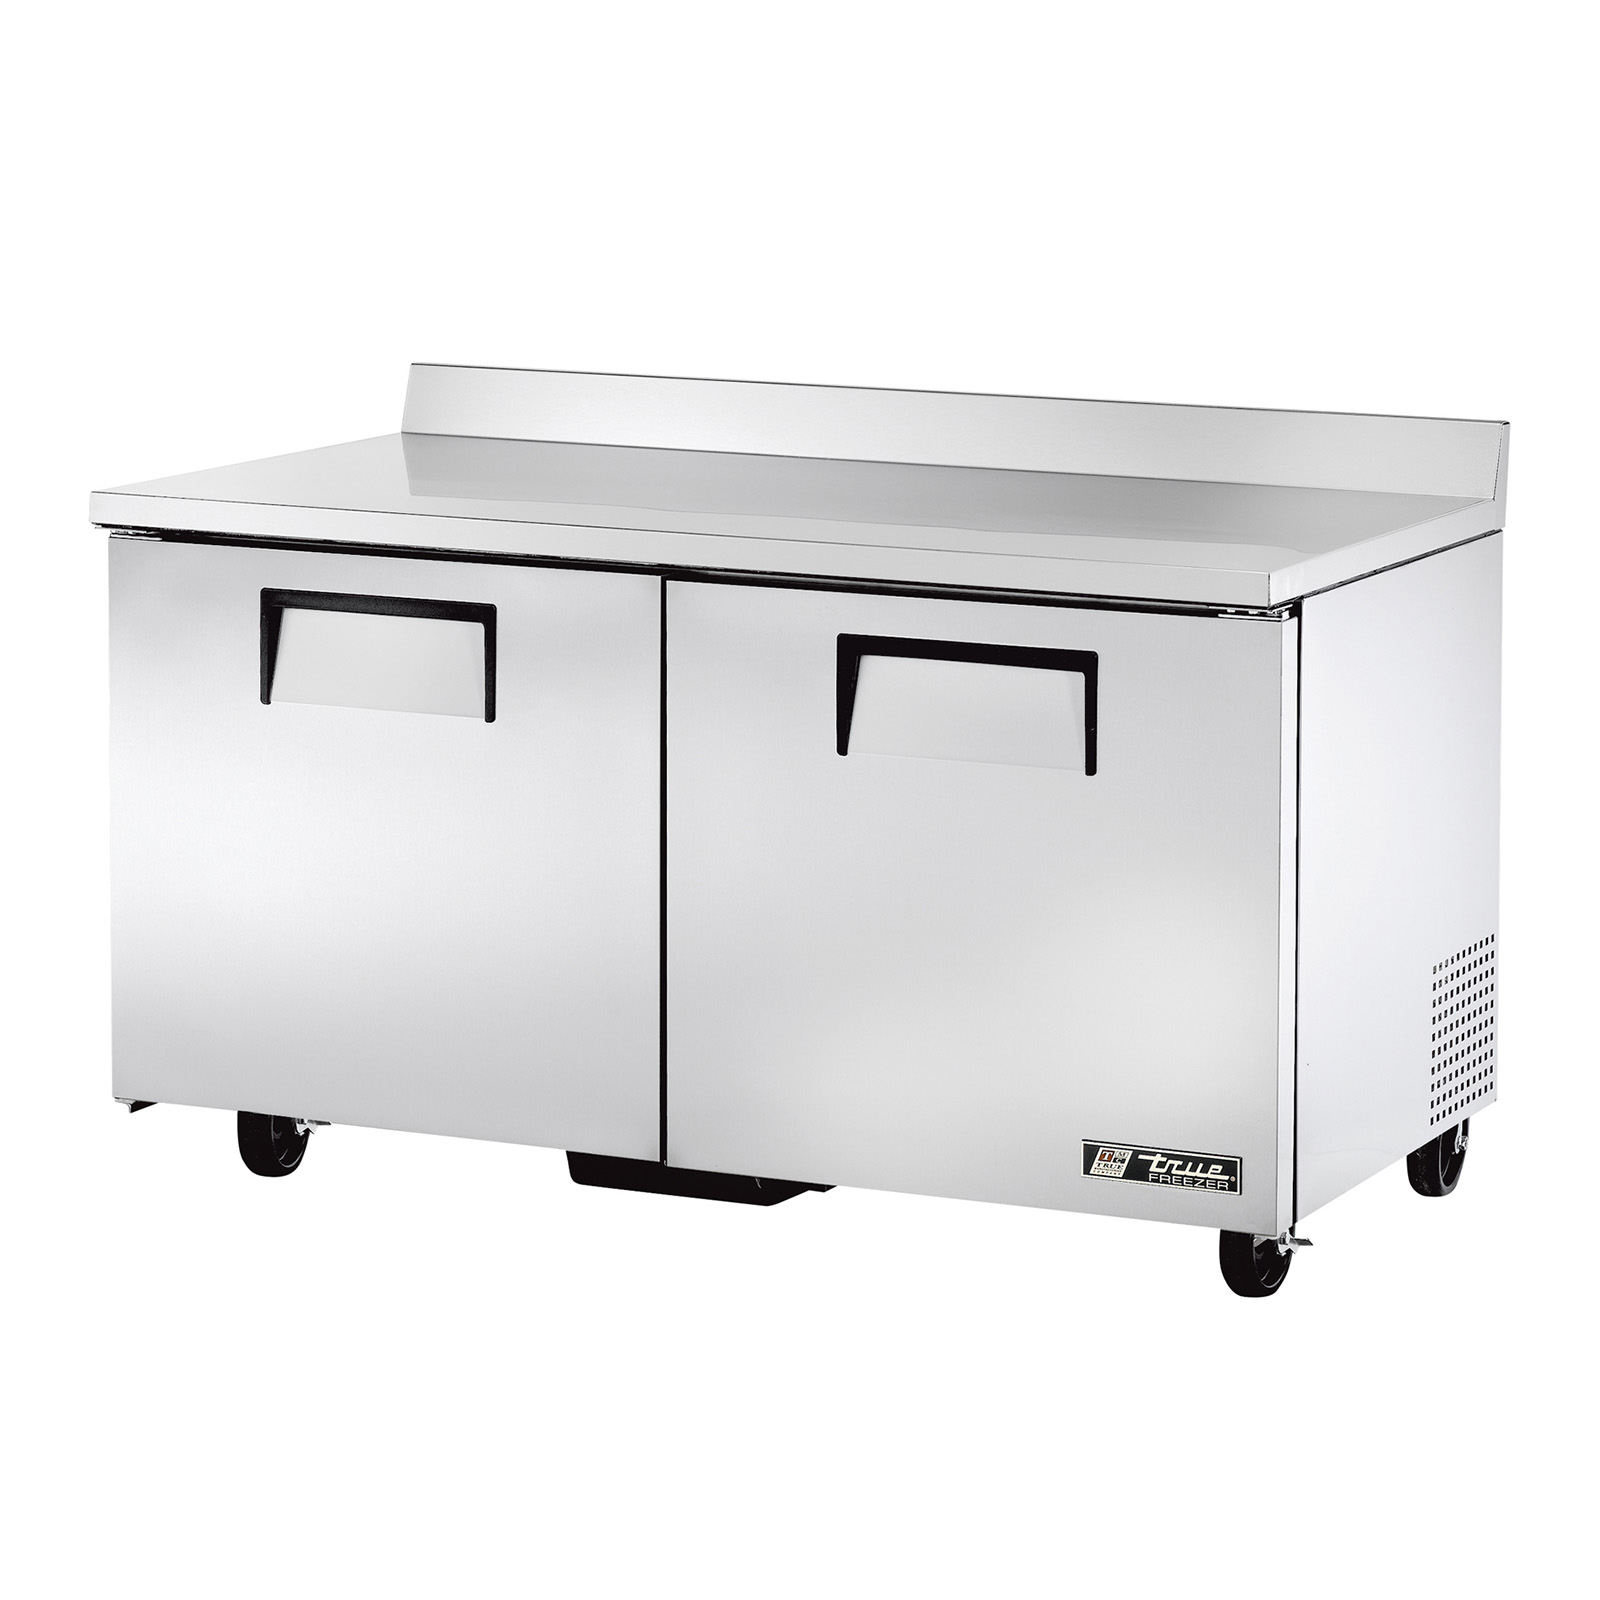 True Food Service Equipment TWT-60F Freezer Counter, Work Top